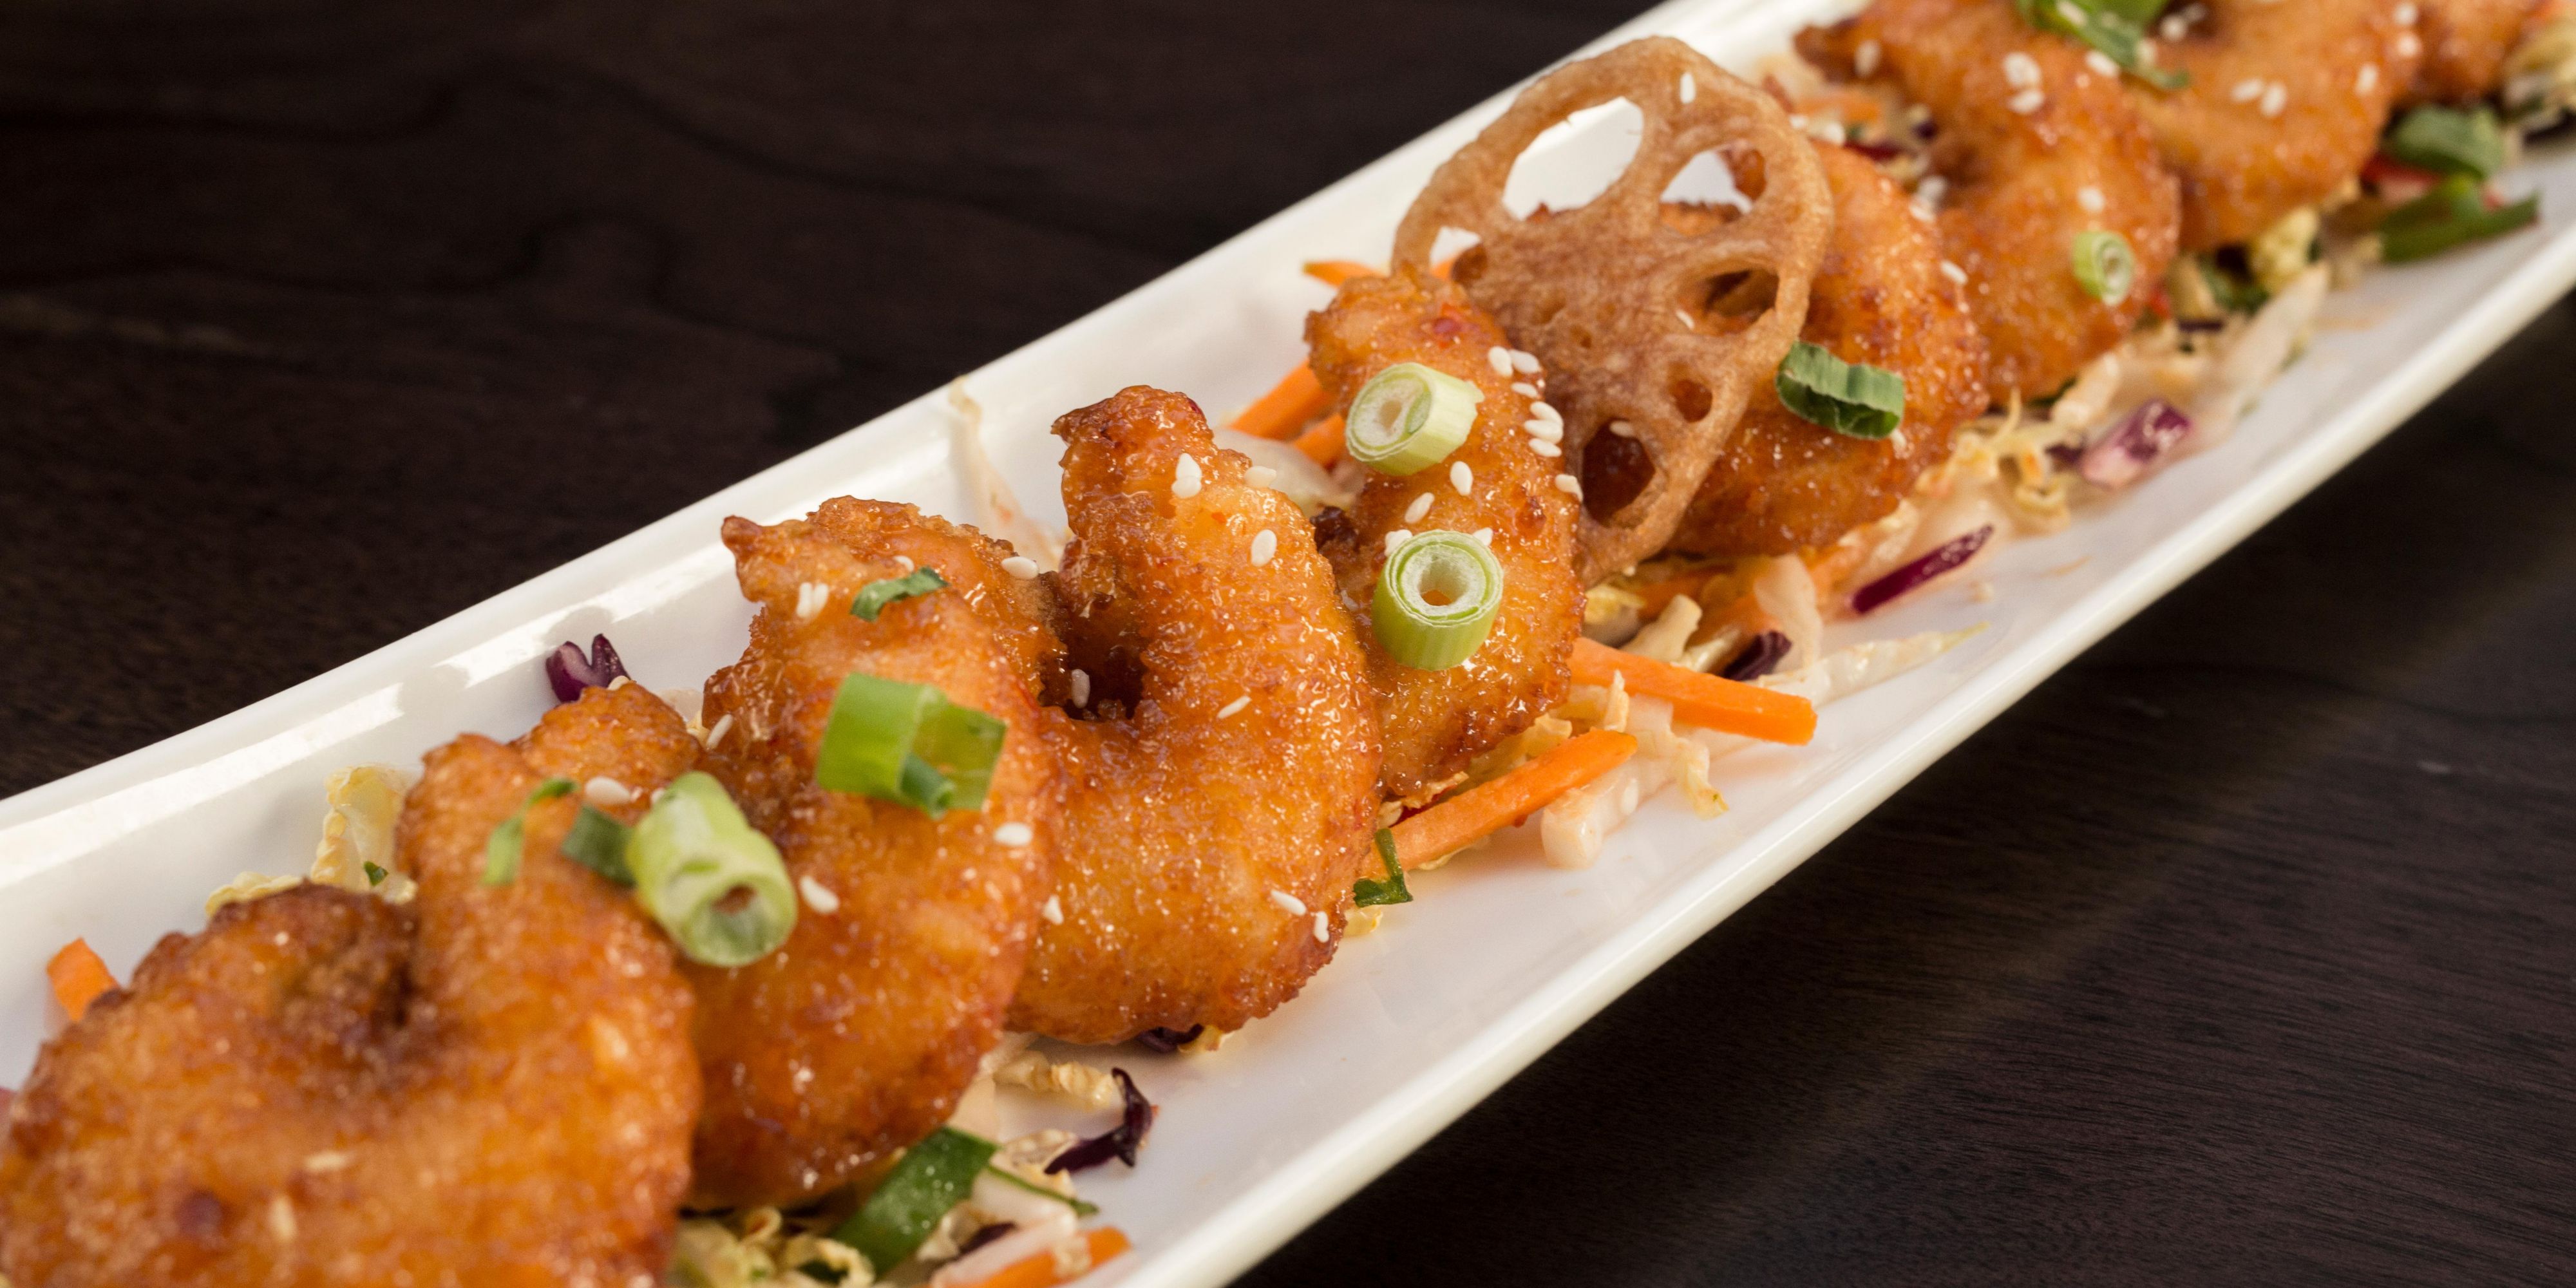 Harvest Plates & Pints menu item, Crispy Firecracker Shrimp